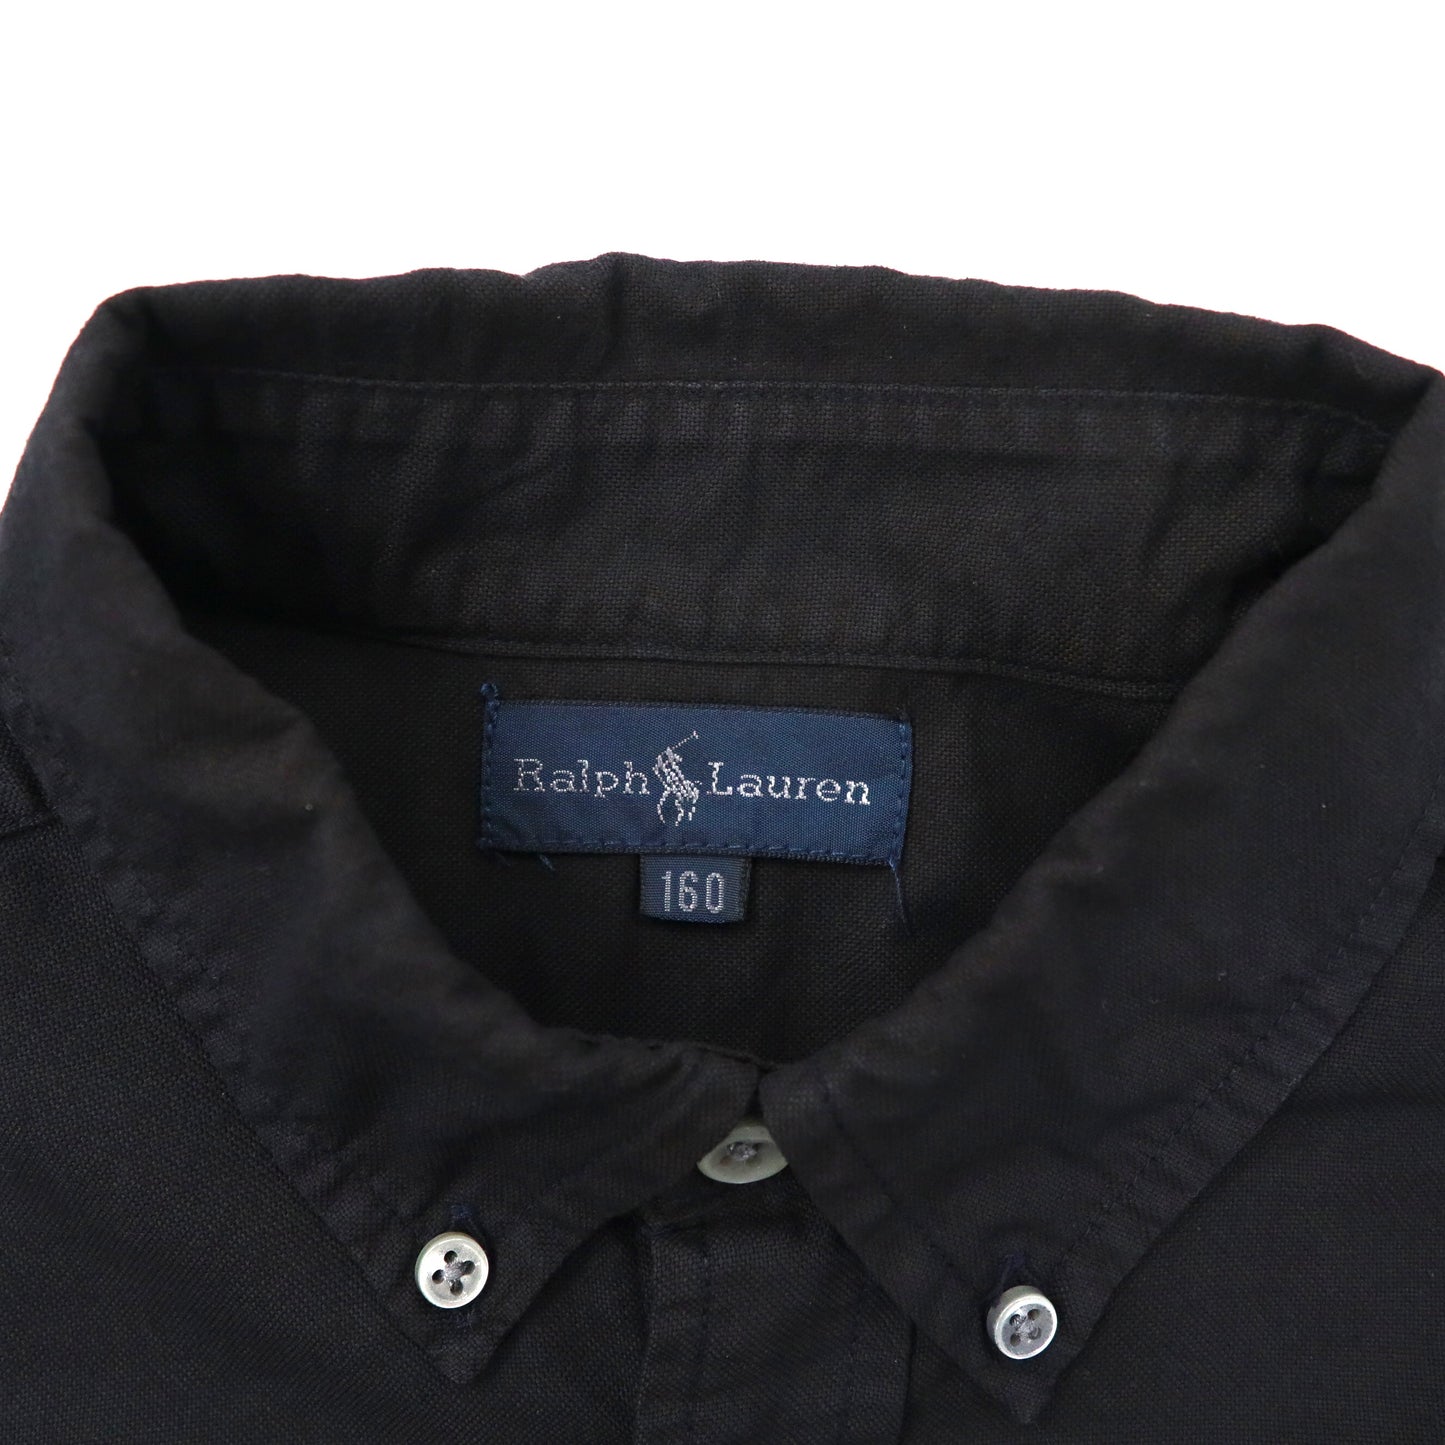 Ralph Lauren ボタンダウンシャツ 160 ネイビー コットン ナンバリング ビッグポニー刺繍